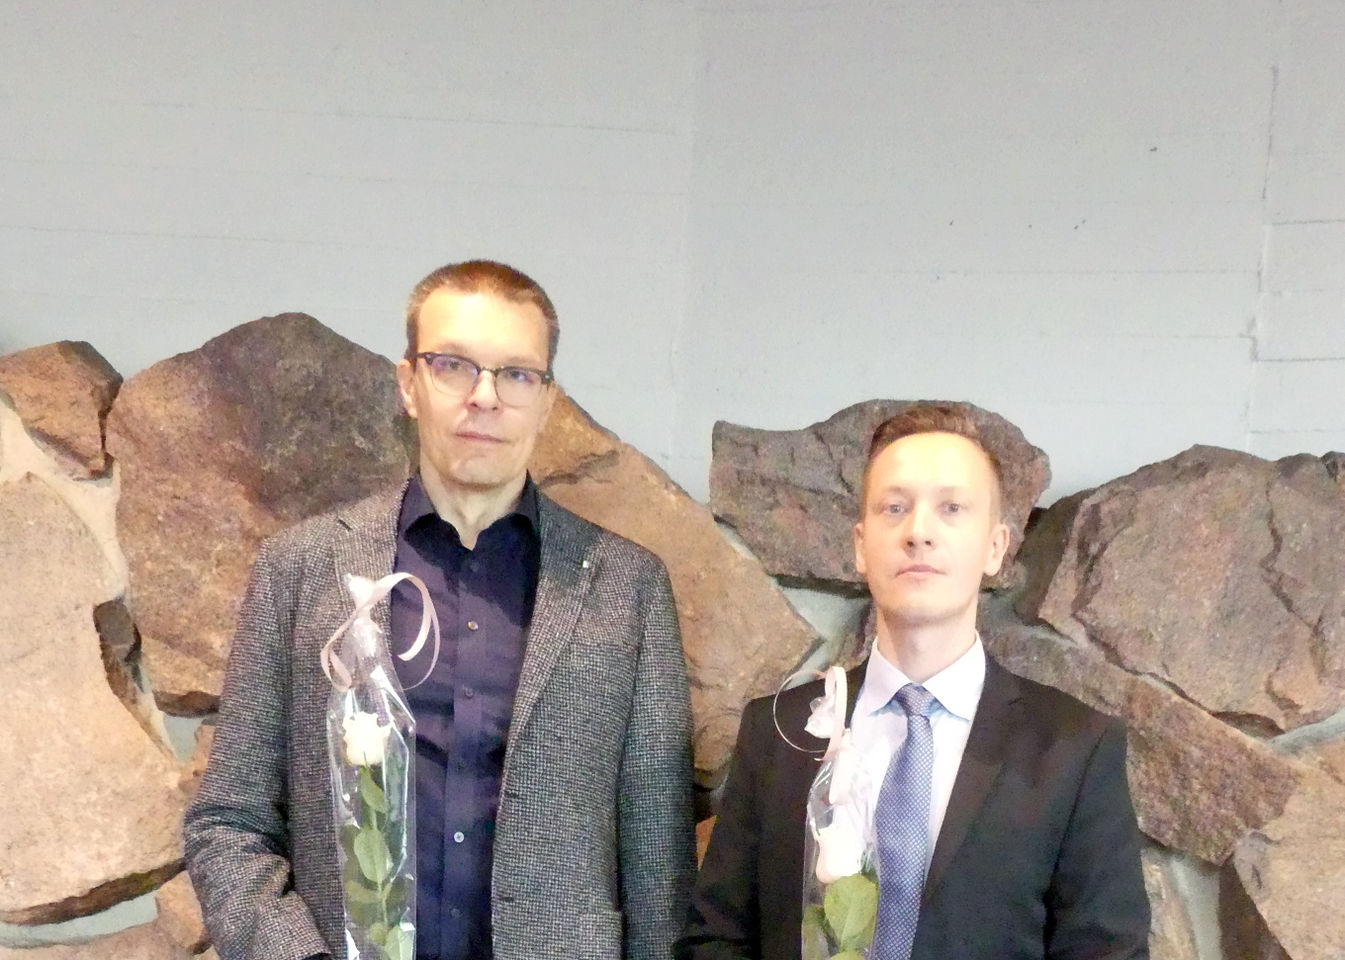 Samuel Kaski (left) and Pekka Manninen (right). Photo: Mary-Ann Alfthan.